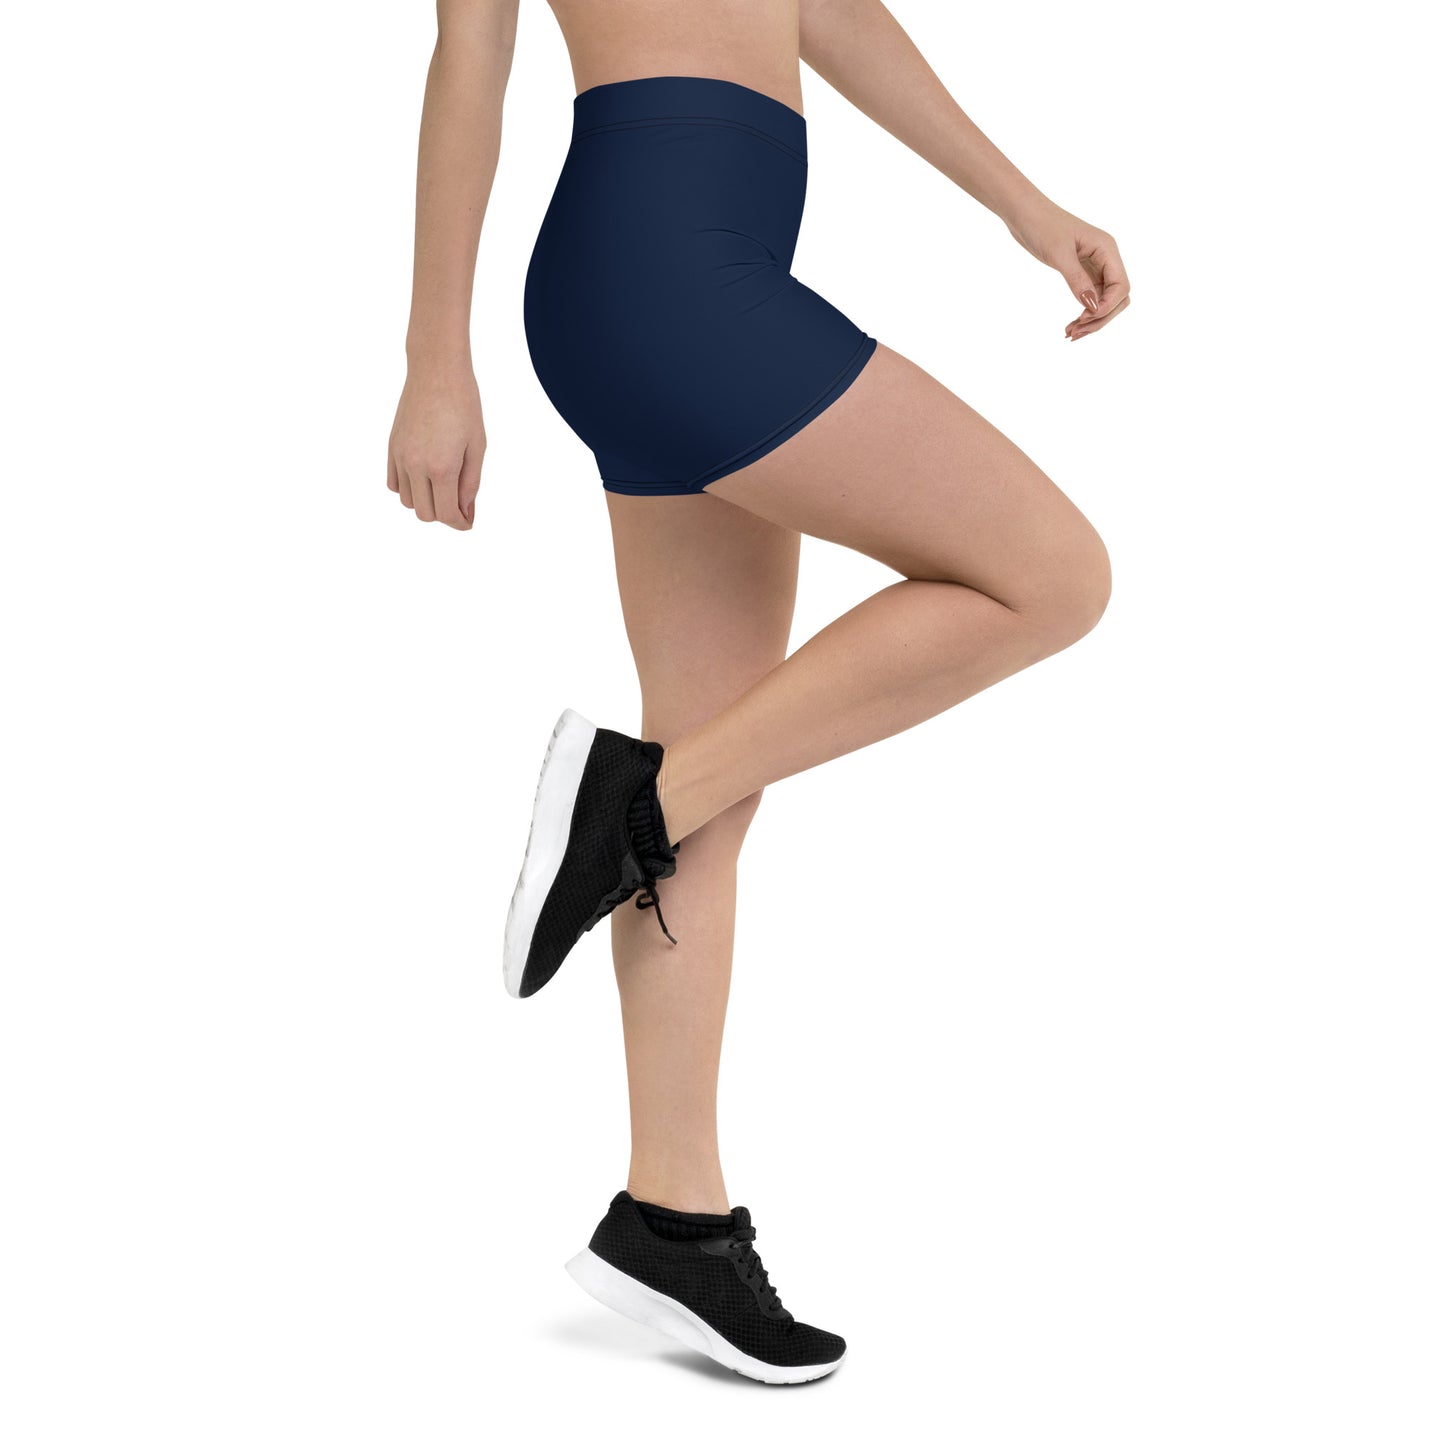 Legging Shorts Yoga & Fitness Dark Blue